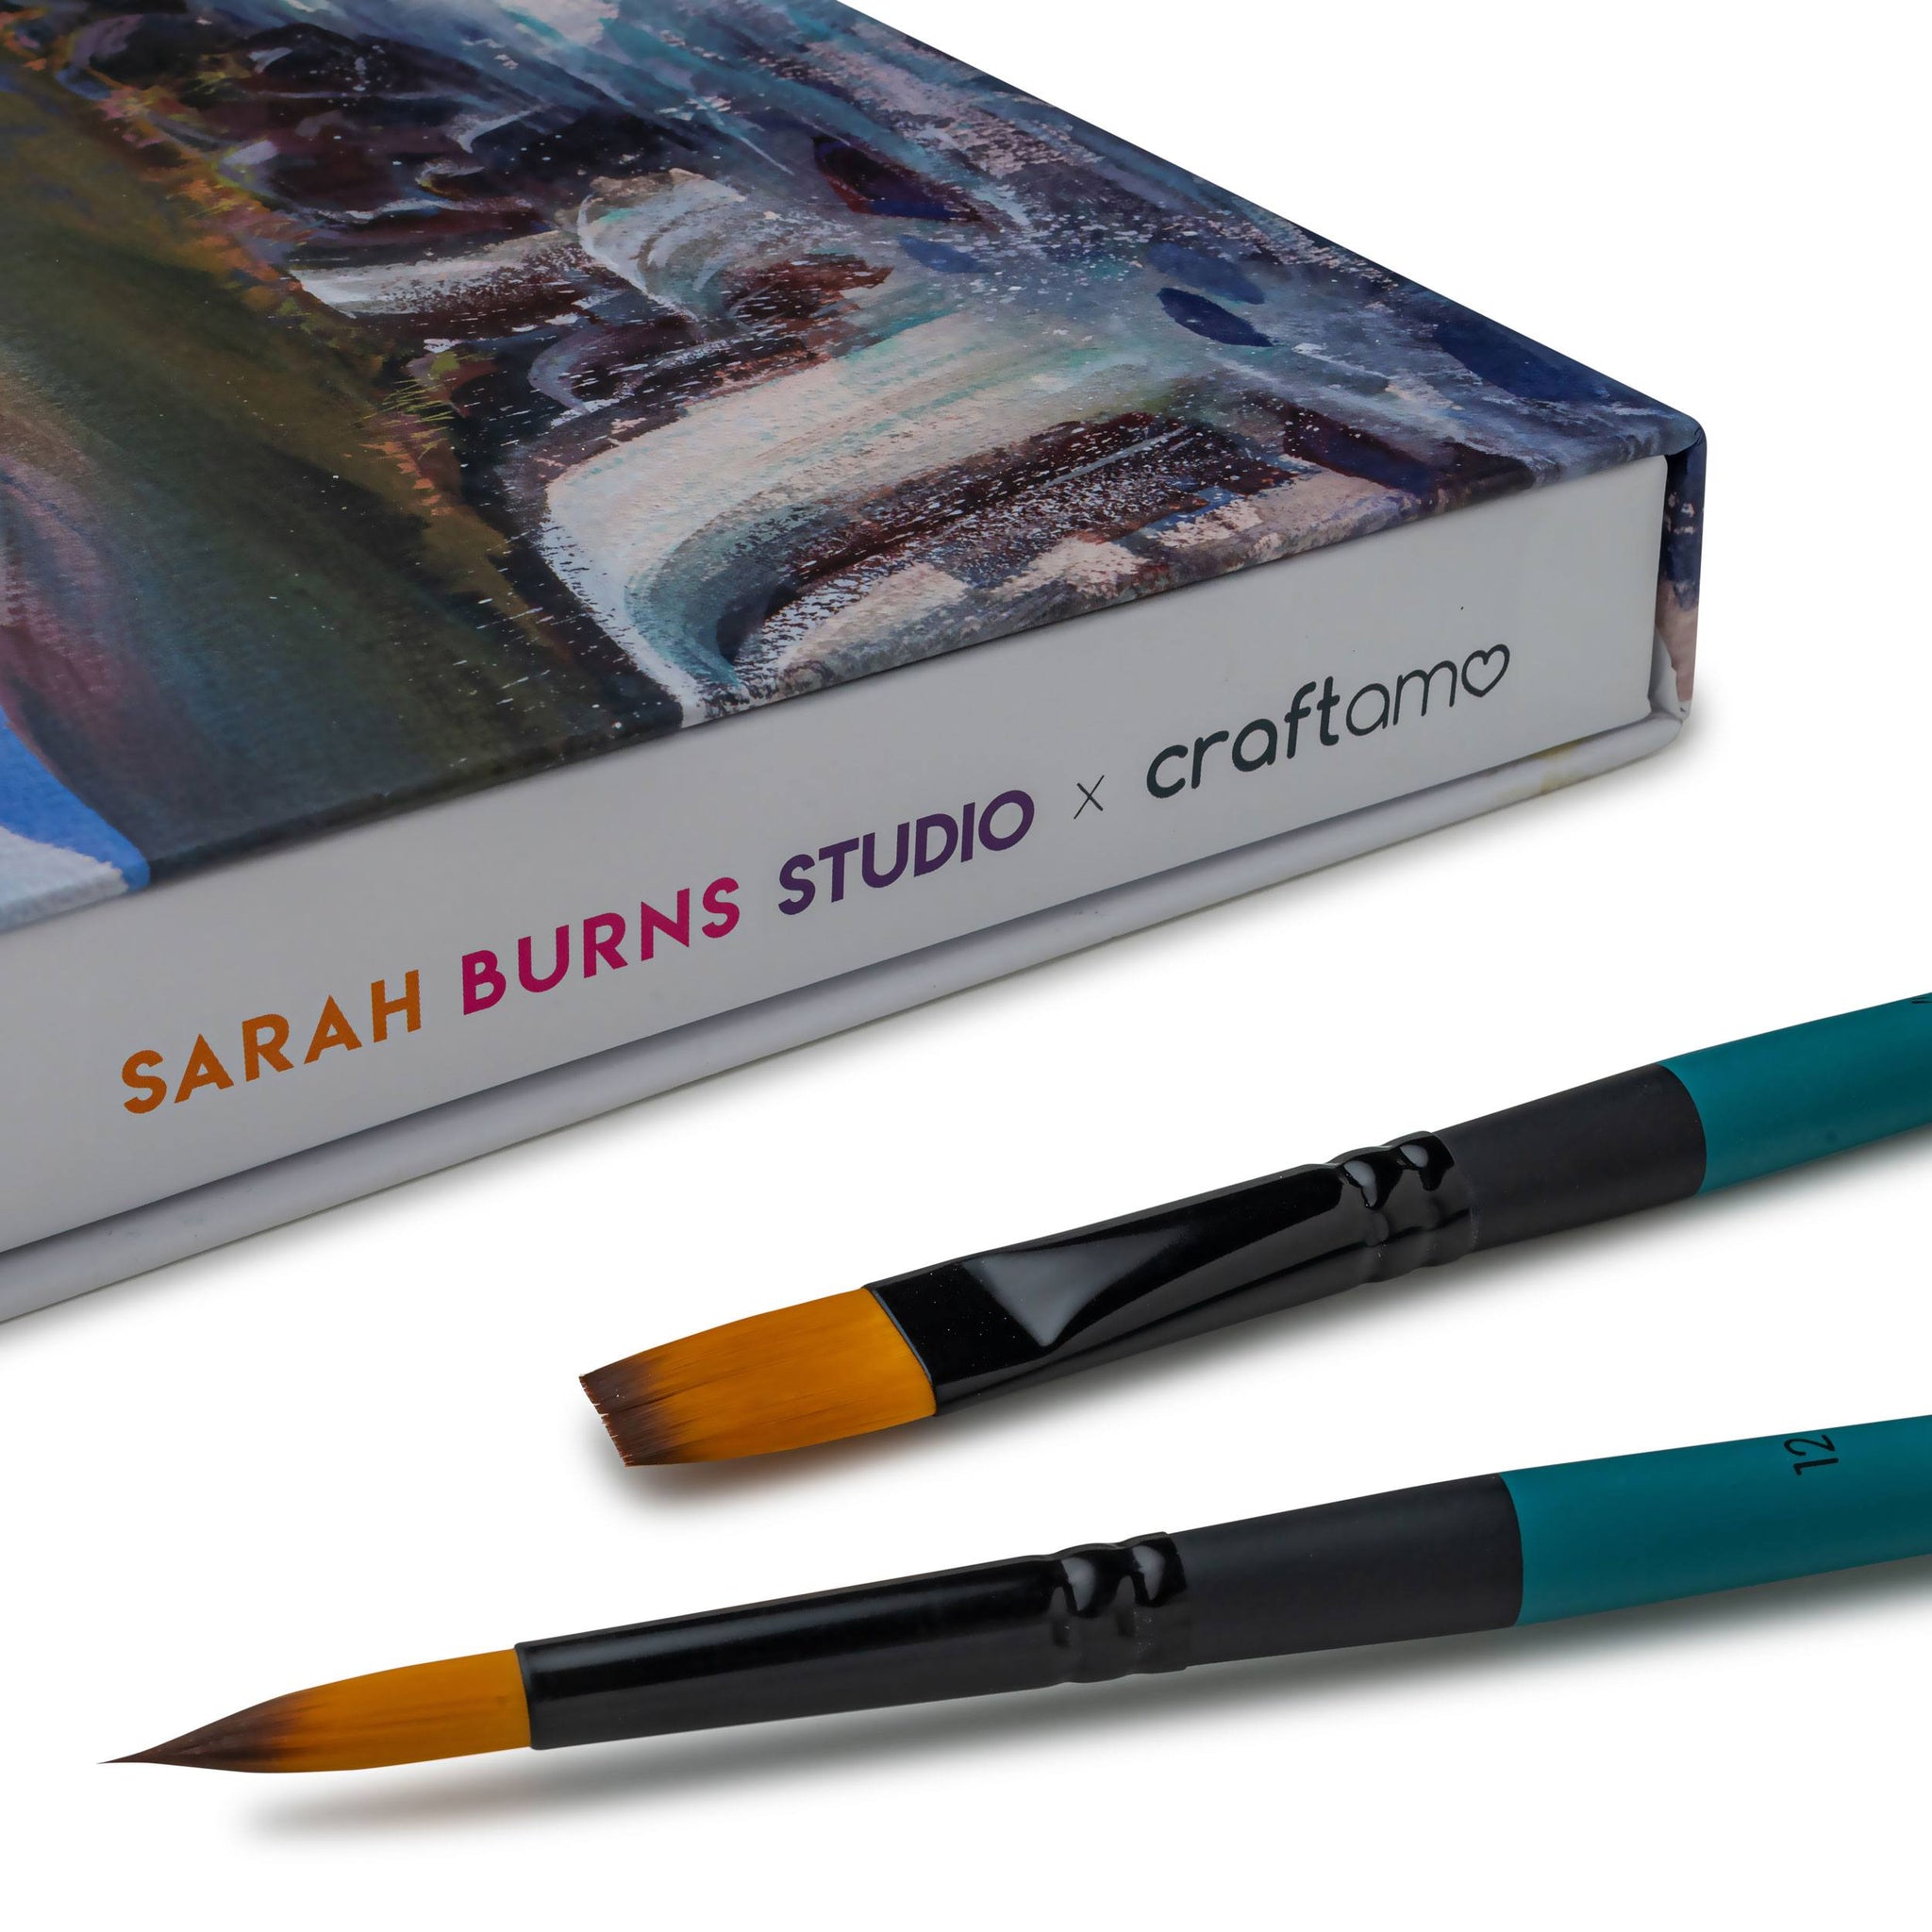 Sarah Burns Studio X Craftamo Gouache Subscription Box